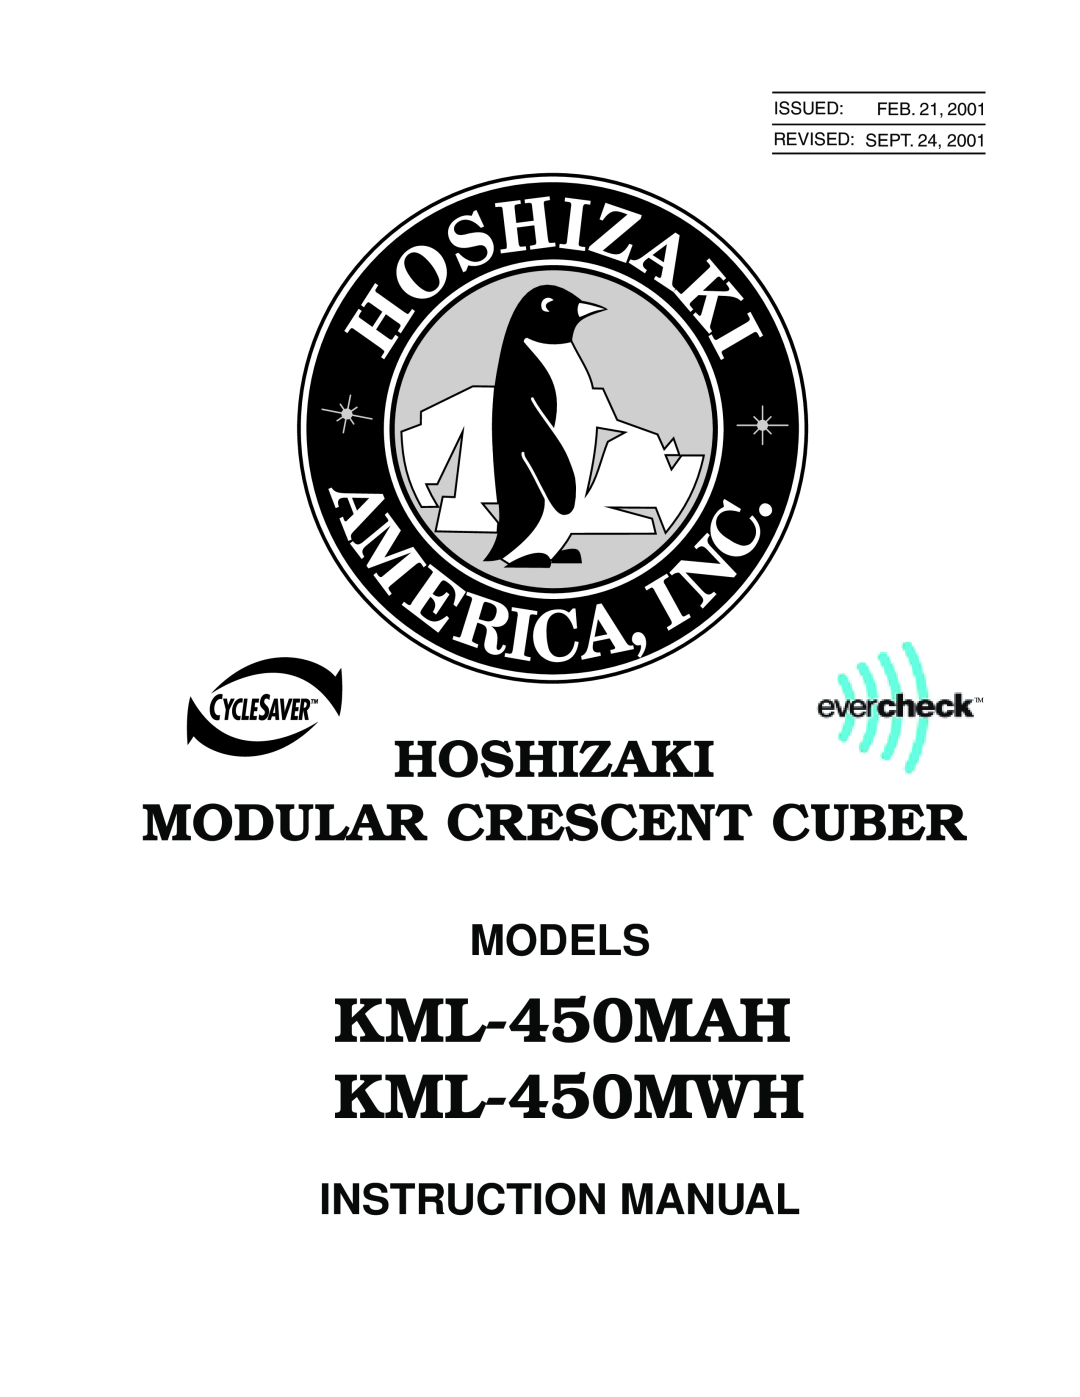 Hoshizaki instruction manual Hoshizaki Modular Crescent Cuber, KML-450MAH KML-450MWH, Models, Issued, Revised Sept, Feb 